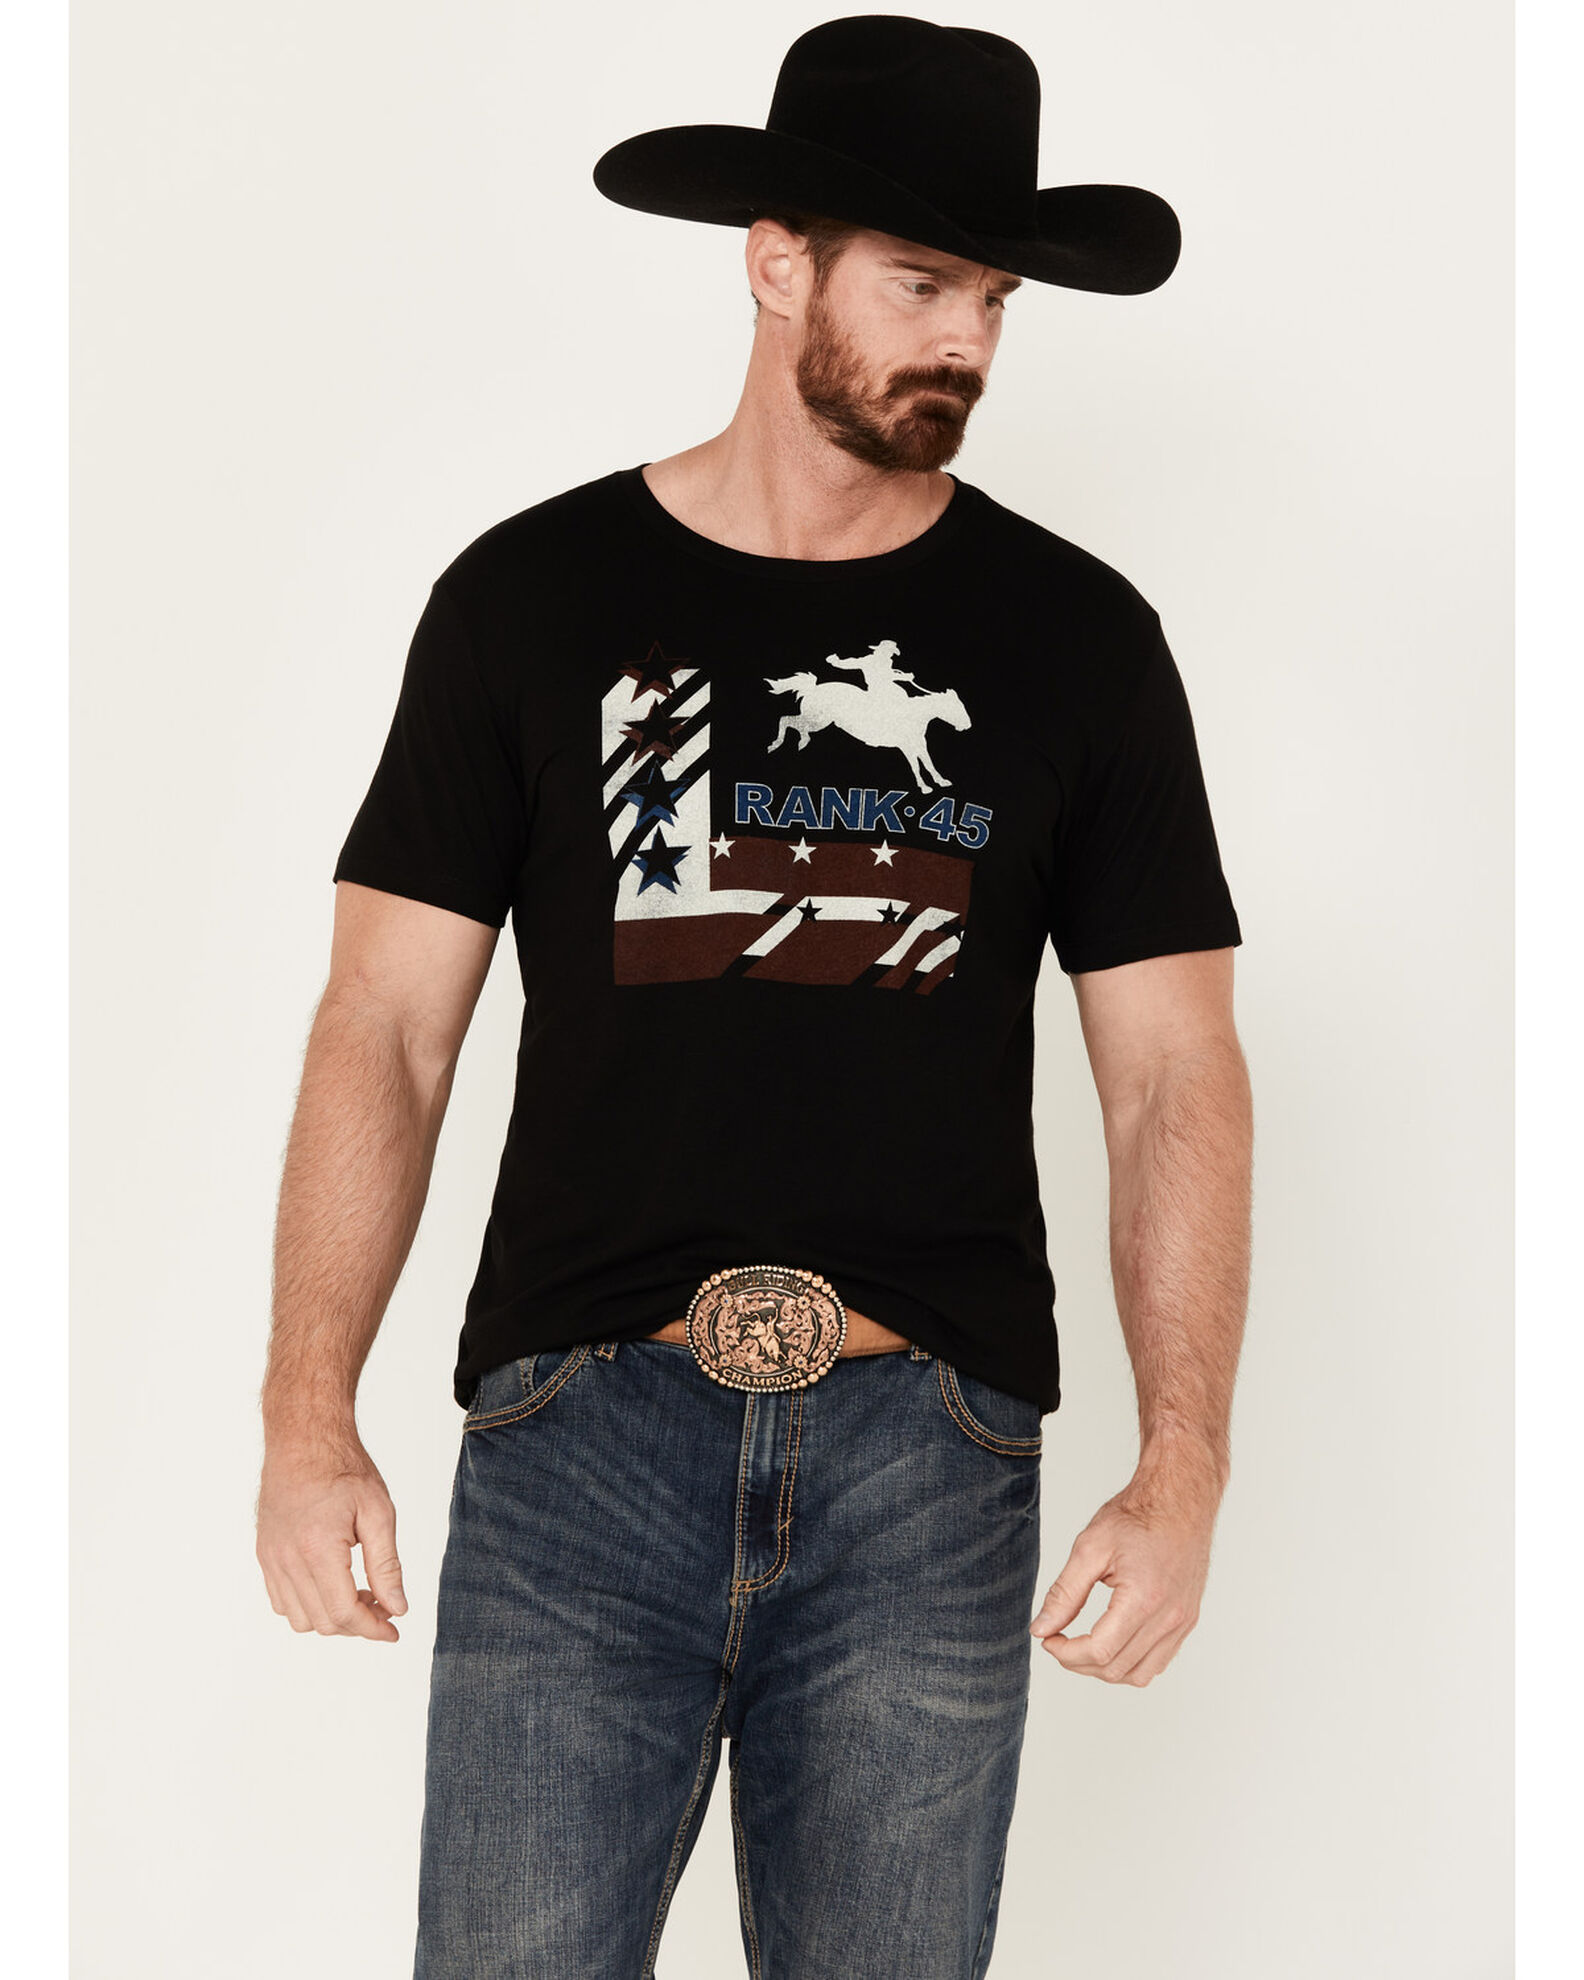 RANK 45® Men's Alban Western Horse Short Sleeve Graphic T-Shirt